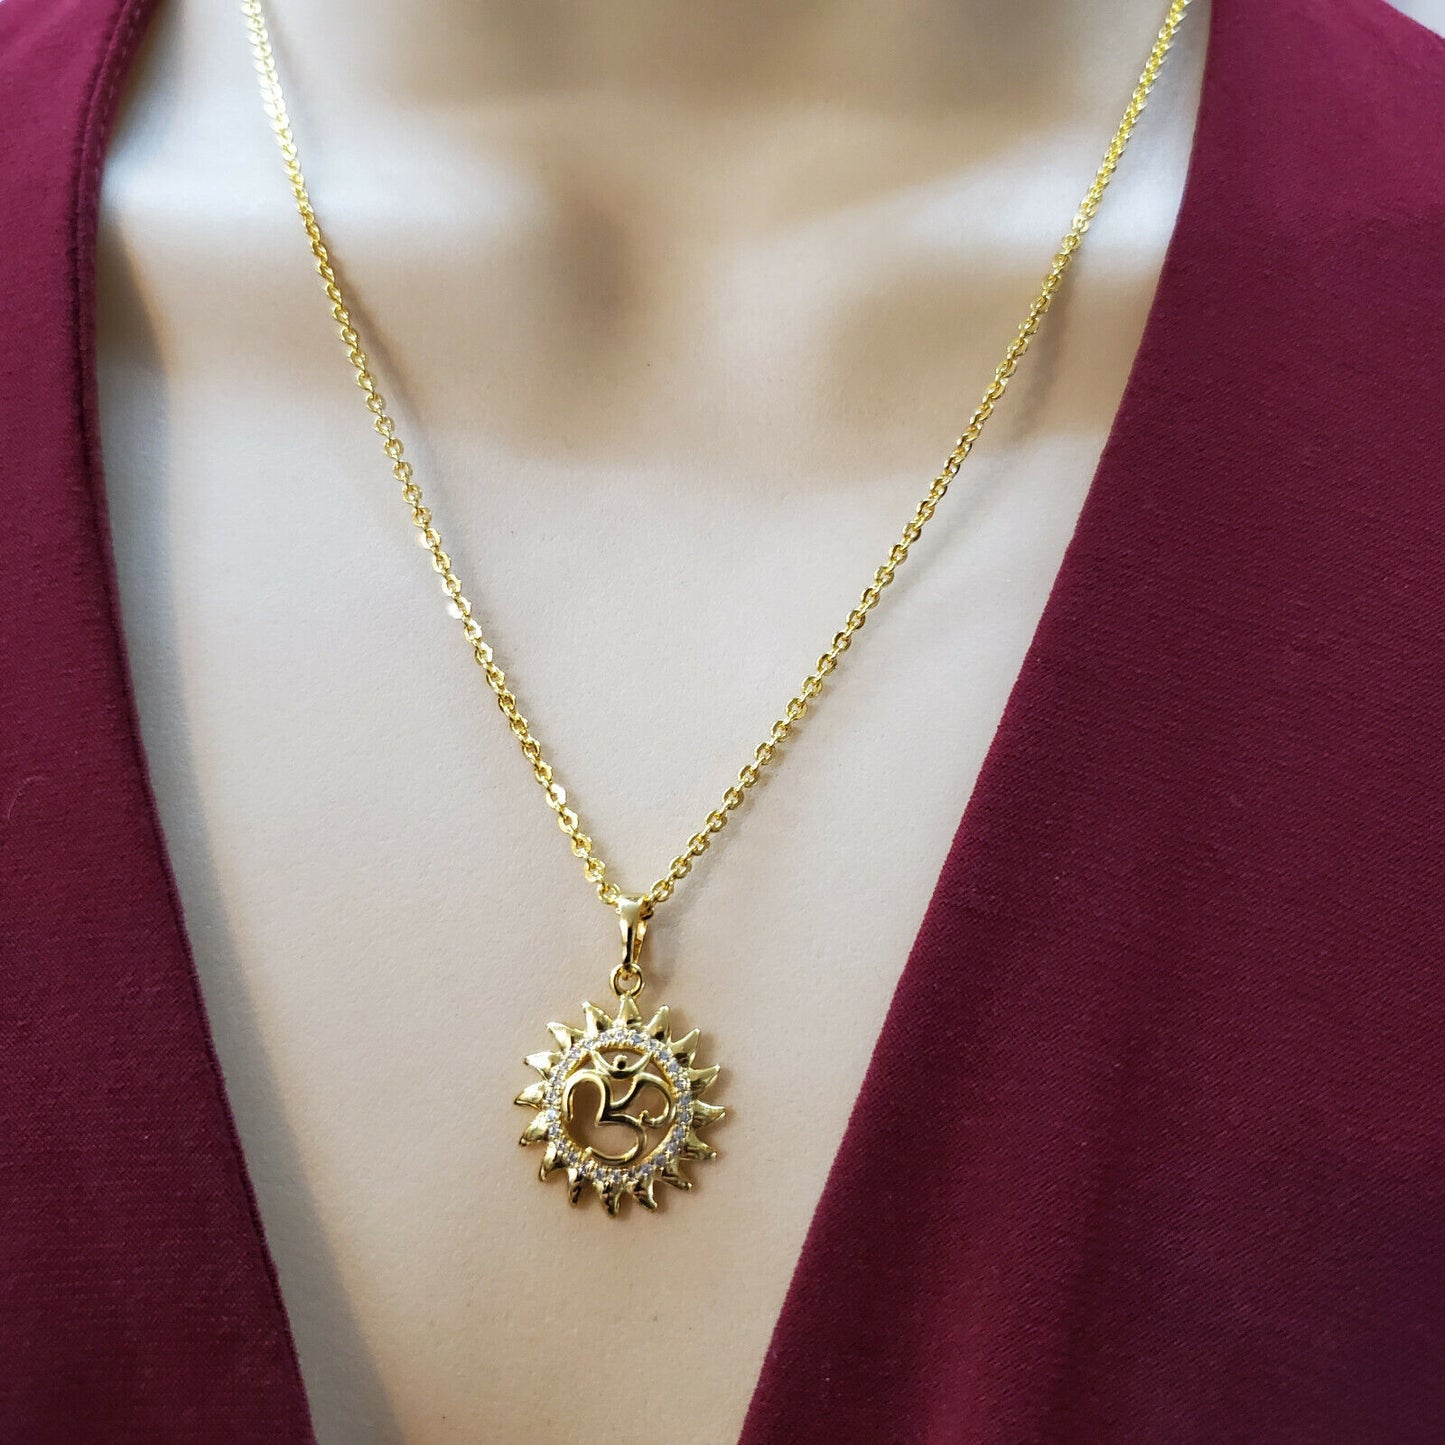 Necklaces - 24K Gold Plated. OM AUM symbol Yoga Pendant & Chain.